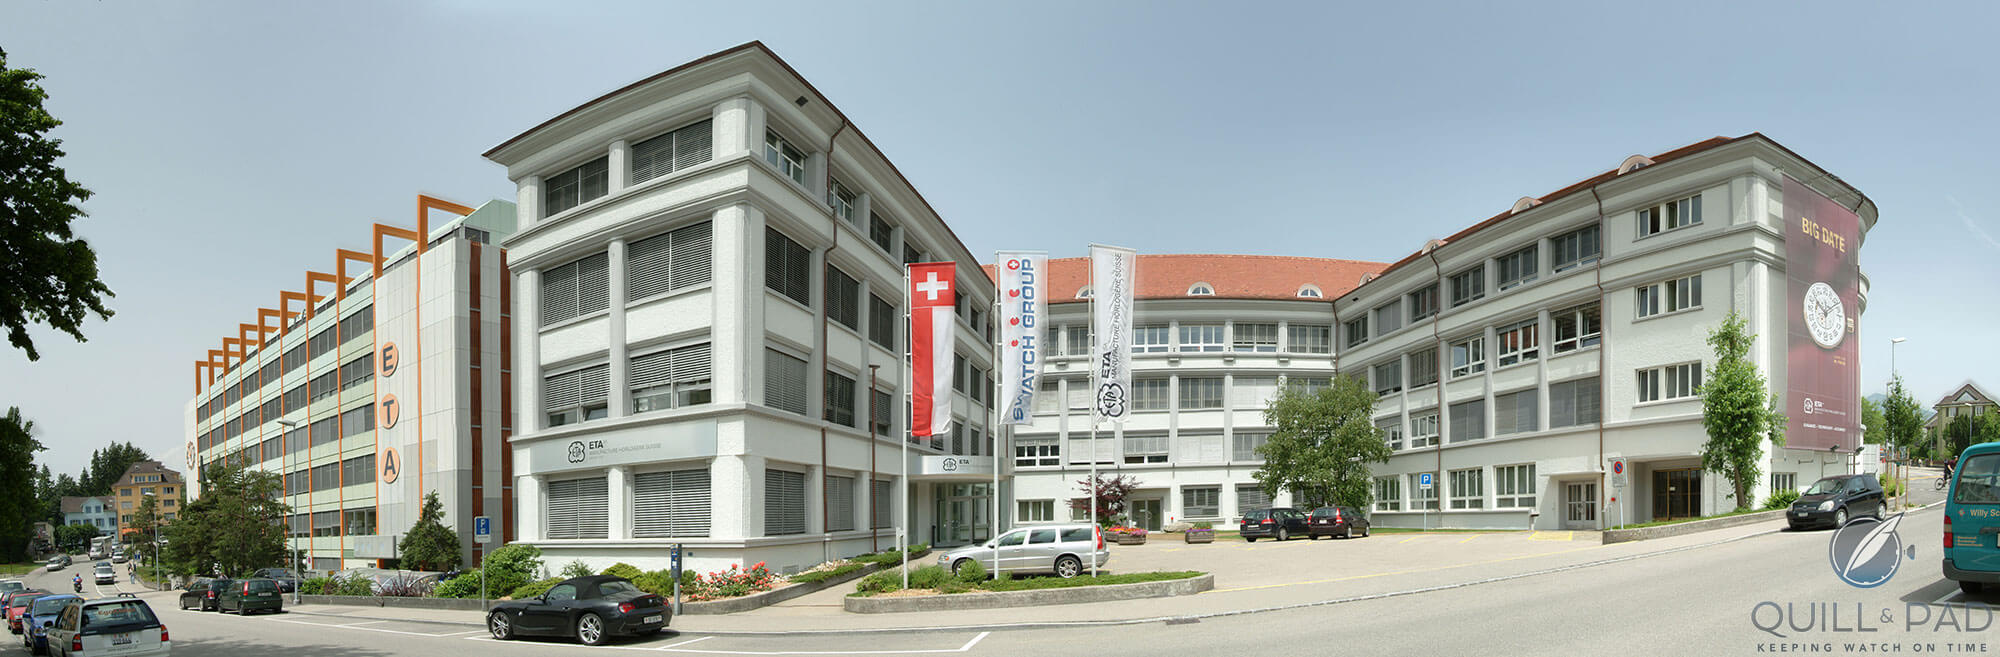 ETA main factory building in 2008